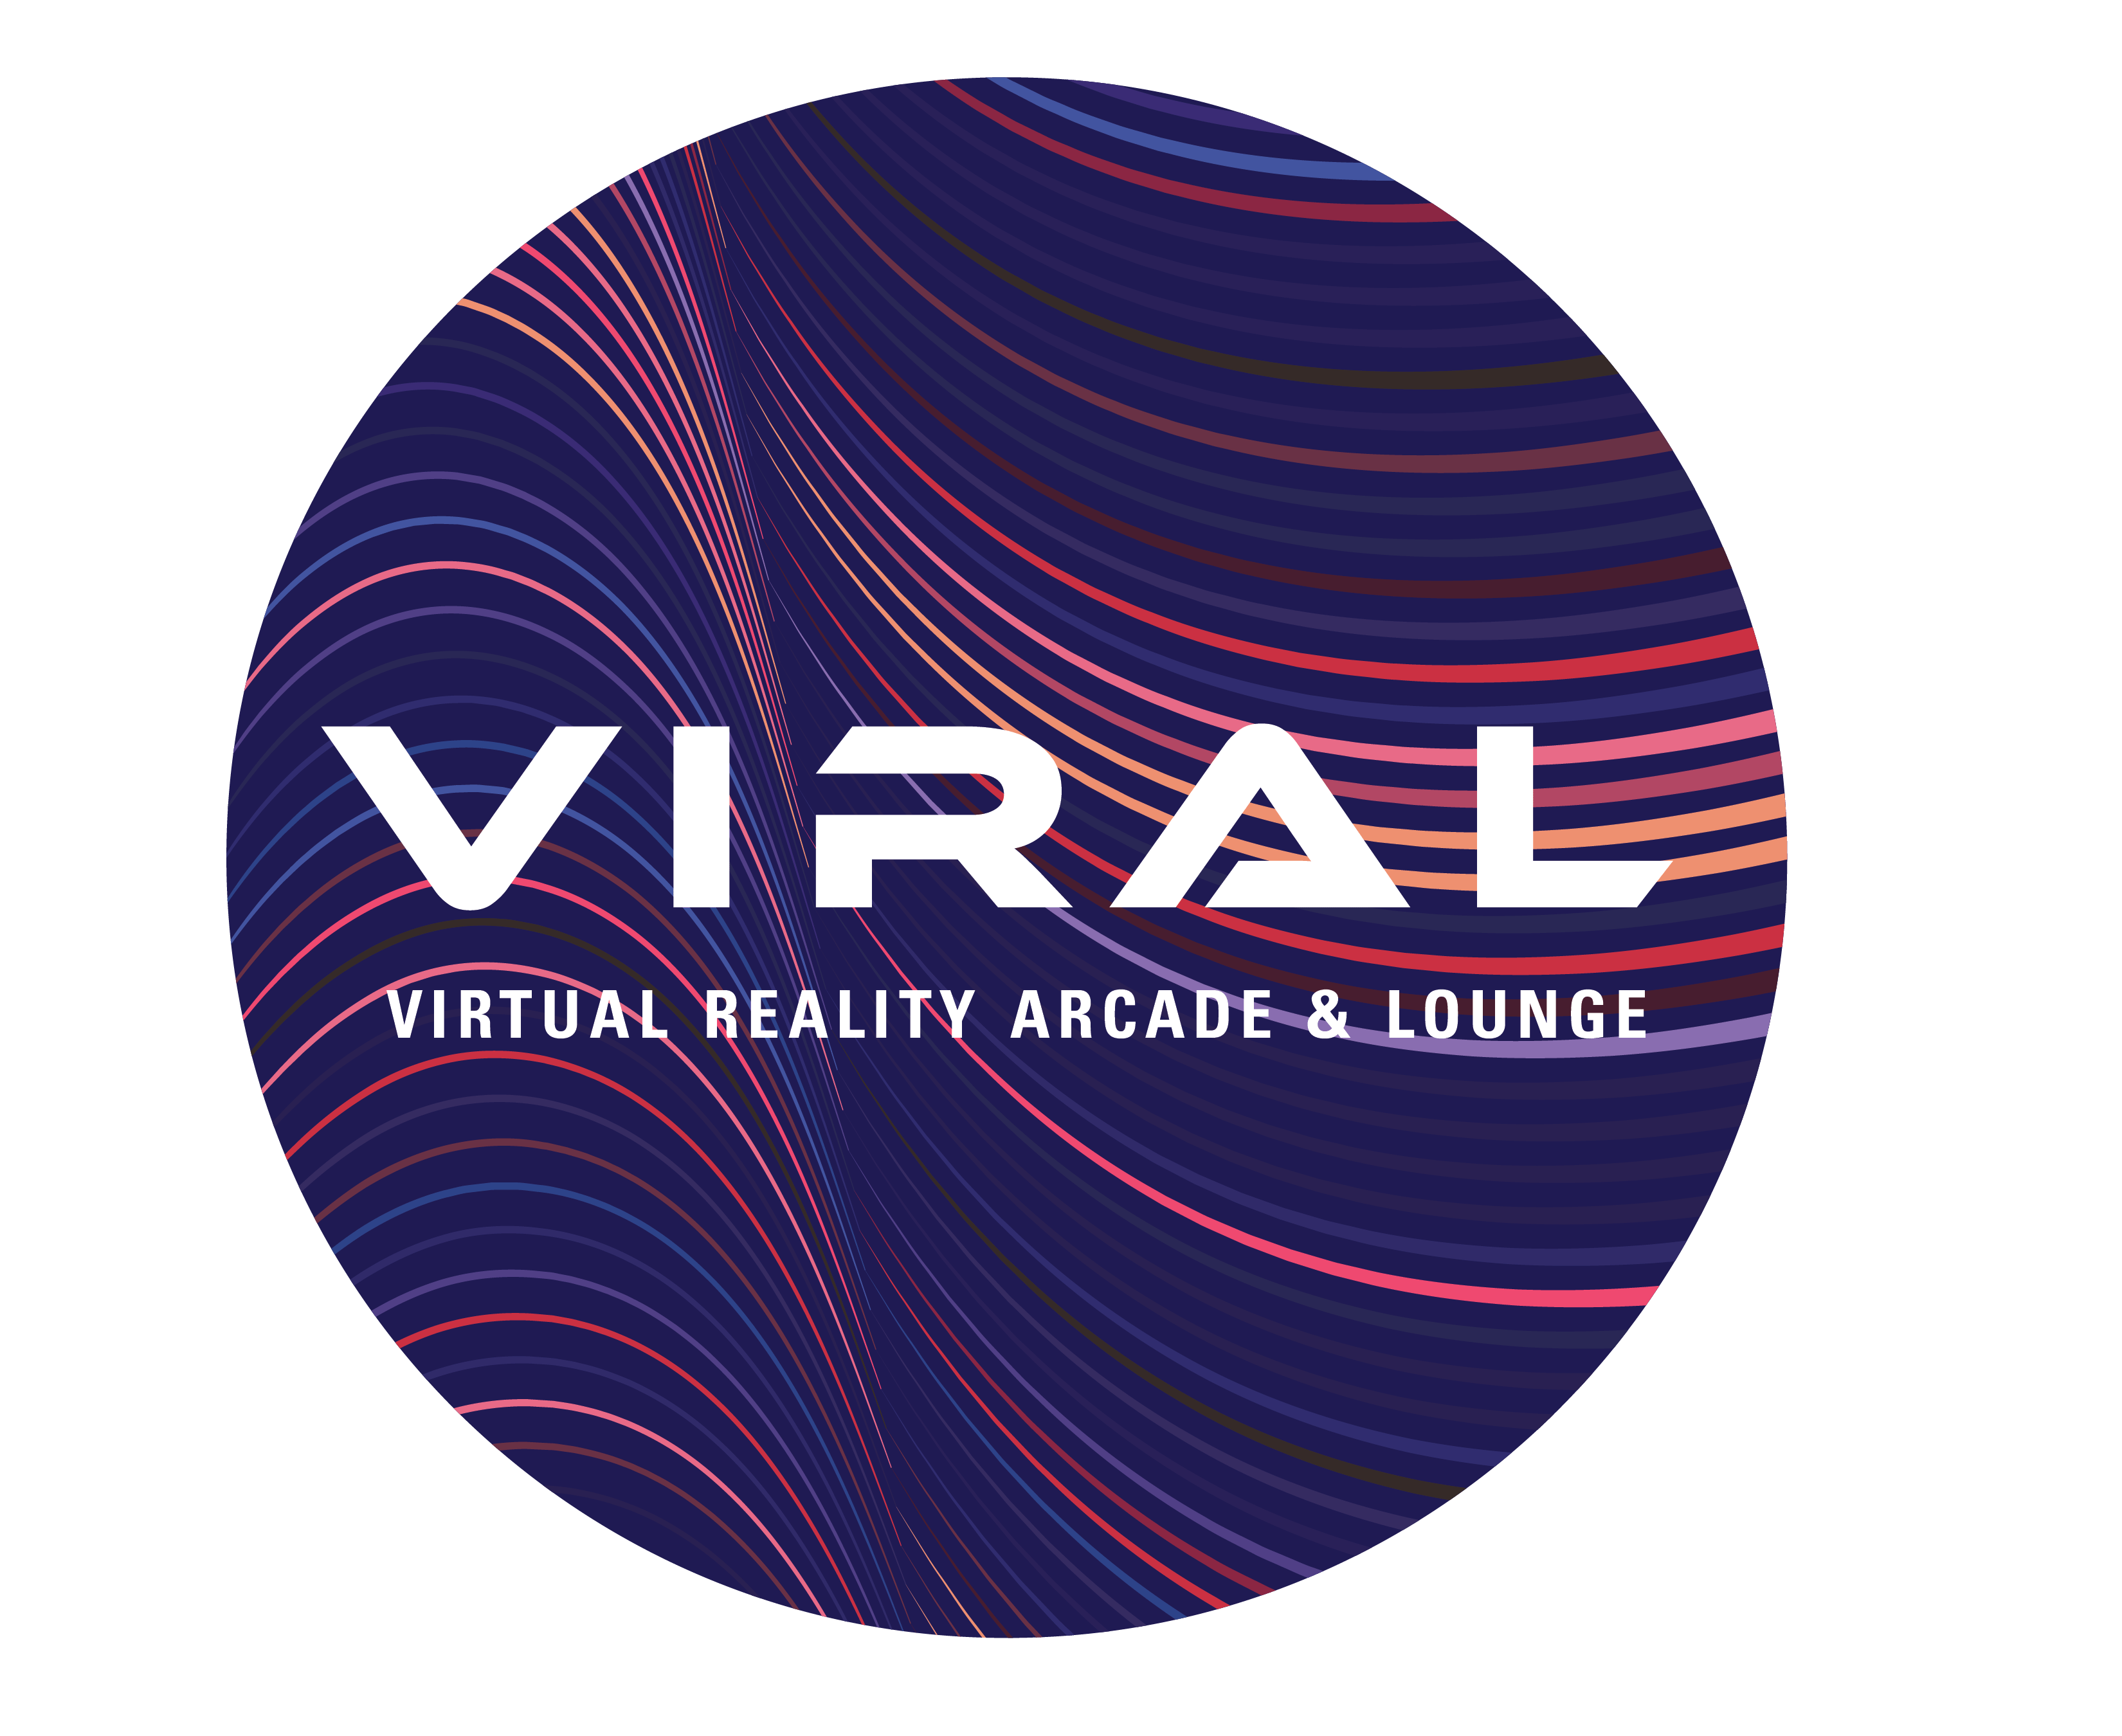 Viral Logo - ViRal Logo - ViRal Arcade